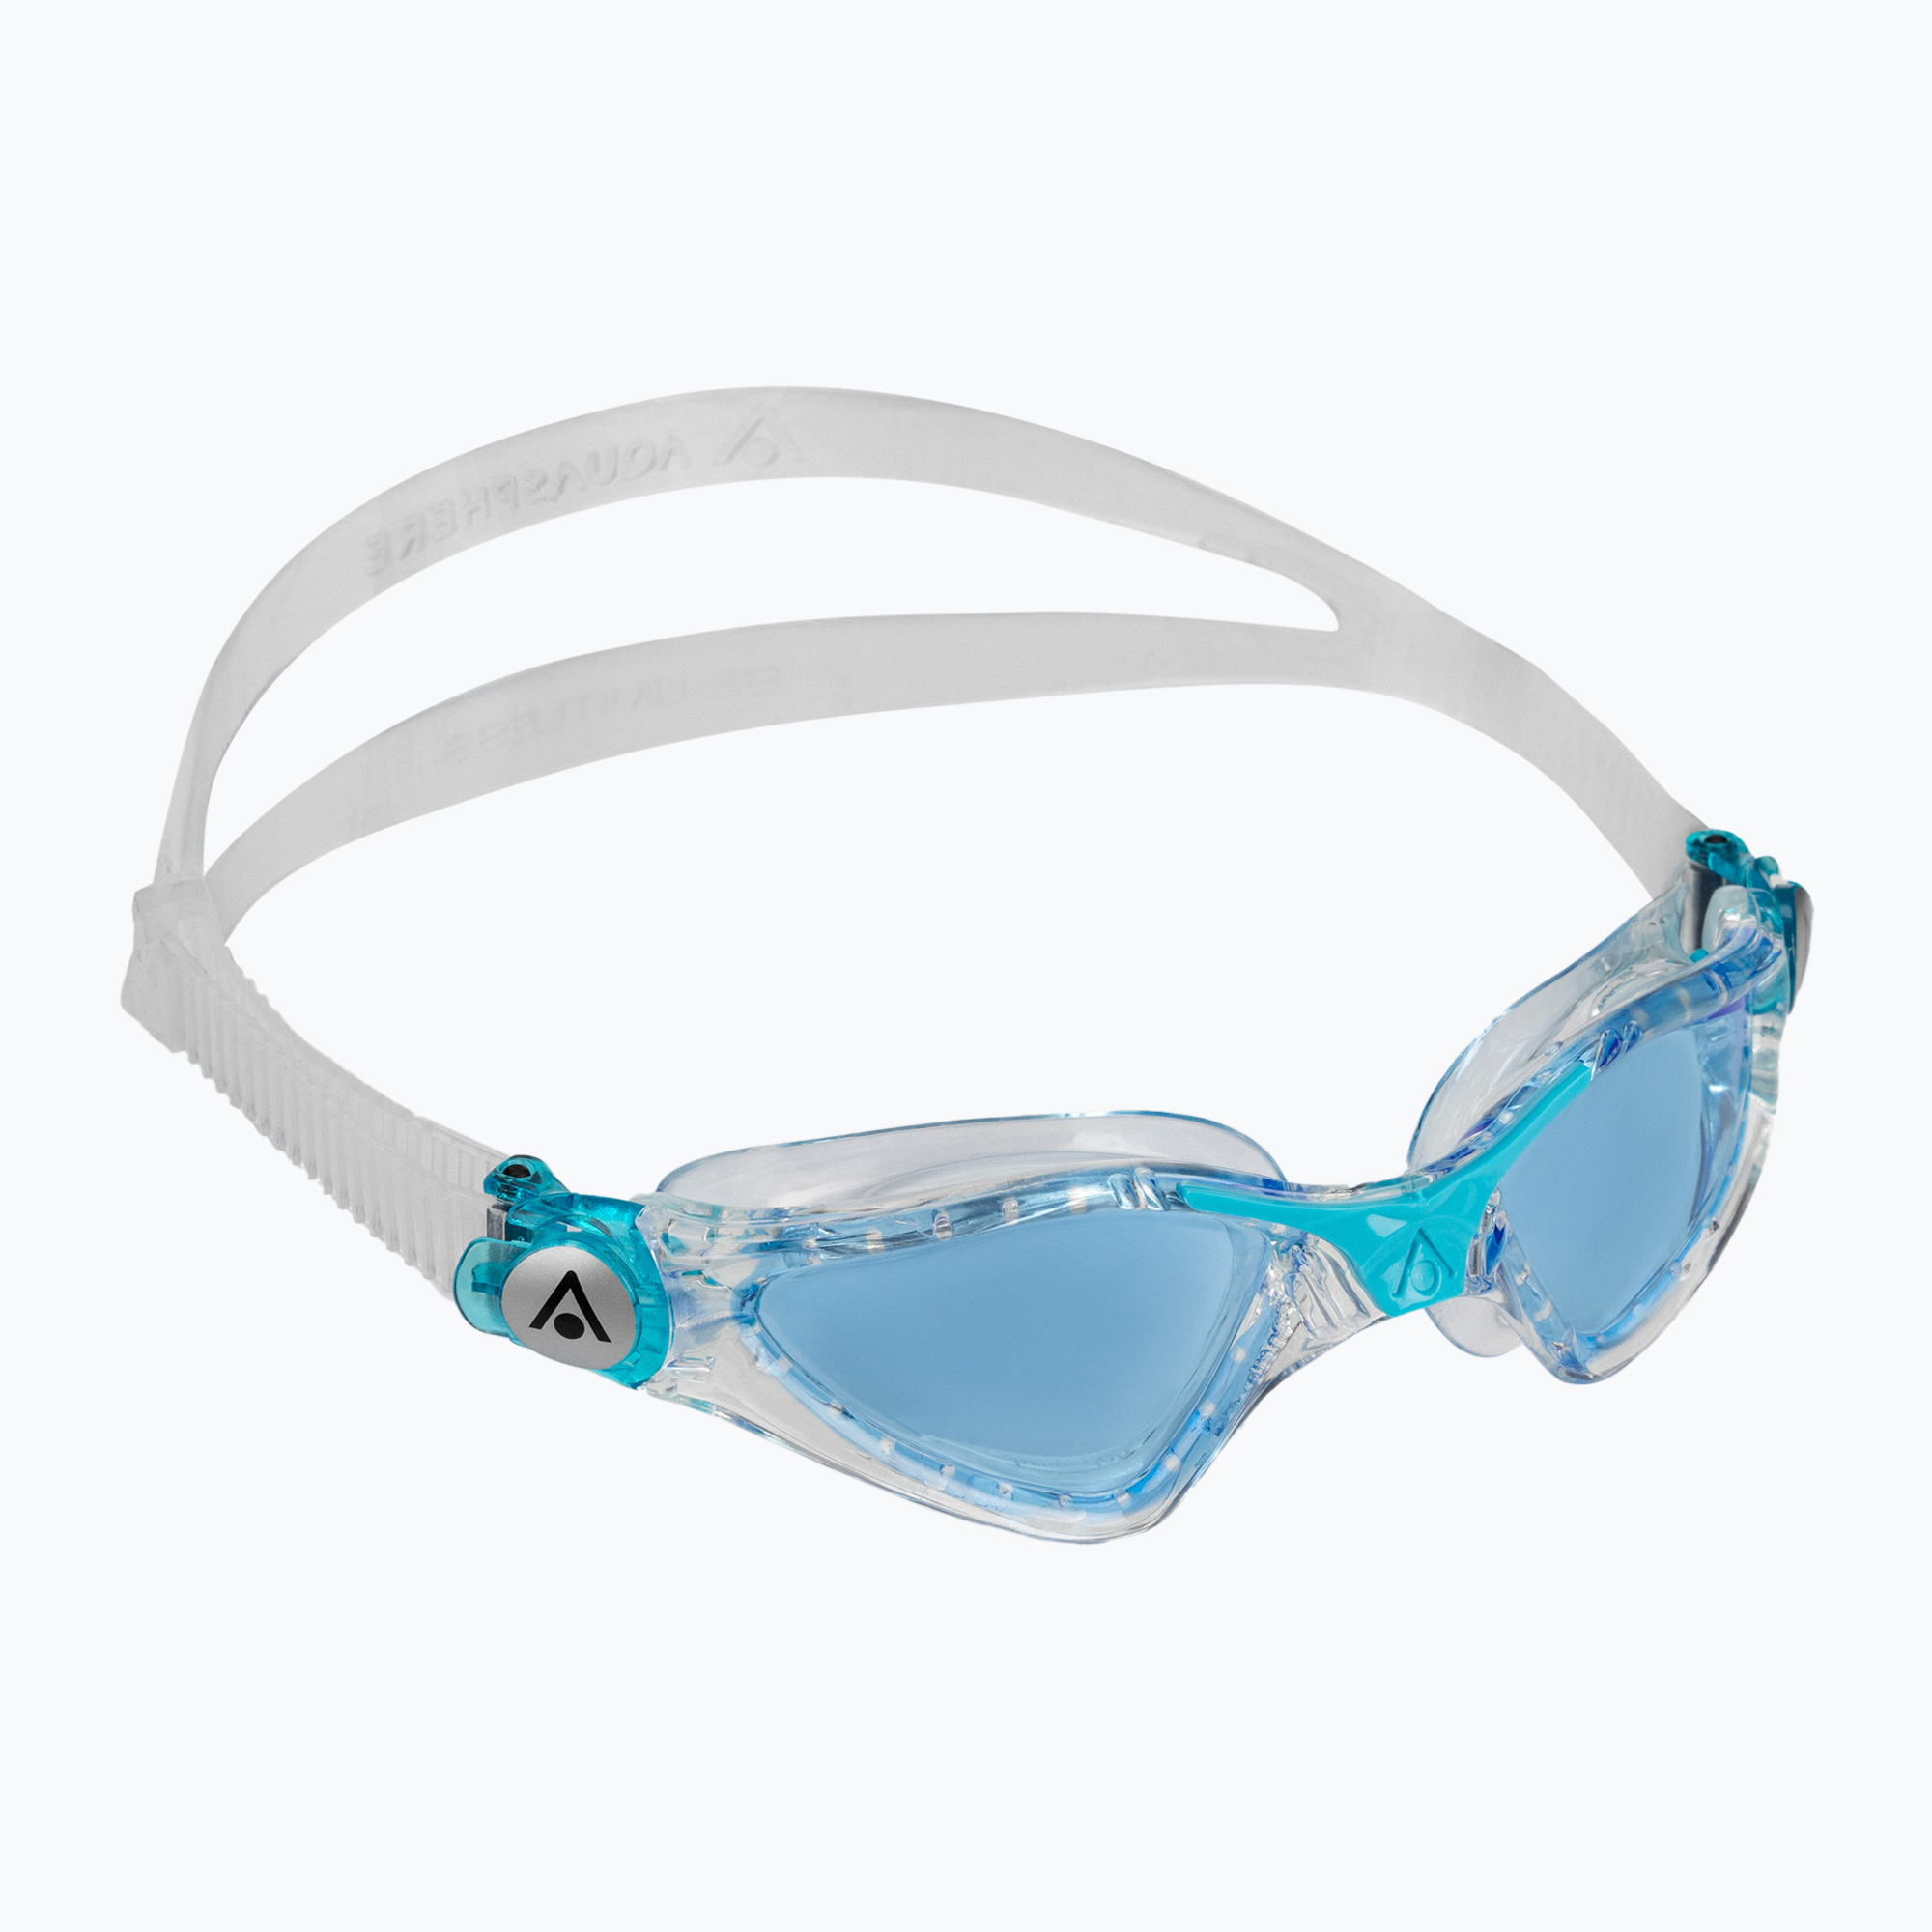 Detské plavecké okuliare Aquasphere Kayenne transparentné / tyrkysové EP3190043LB